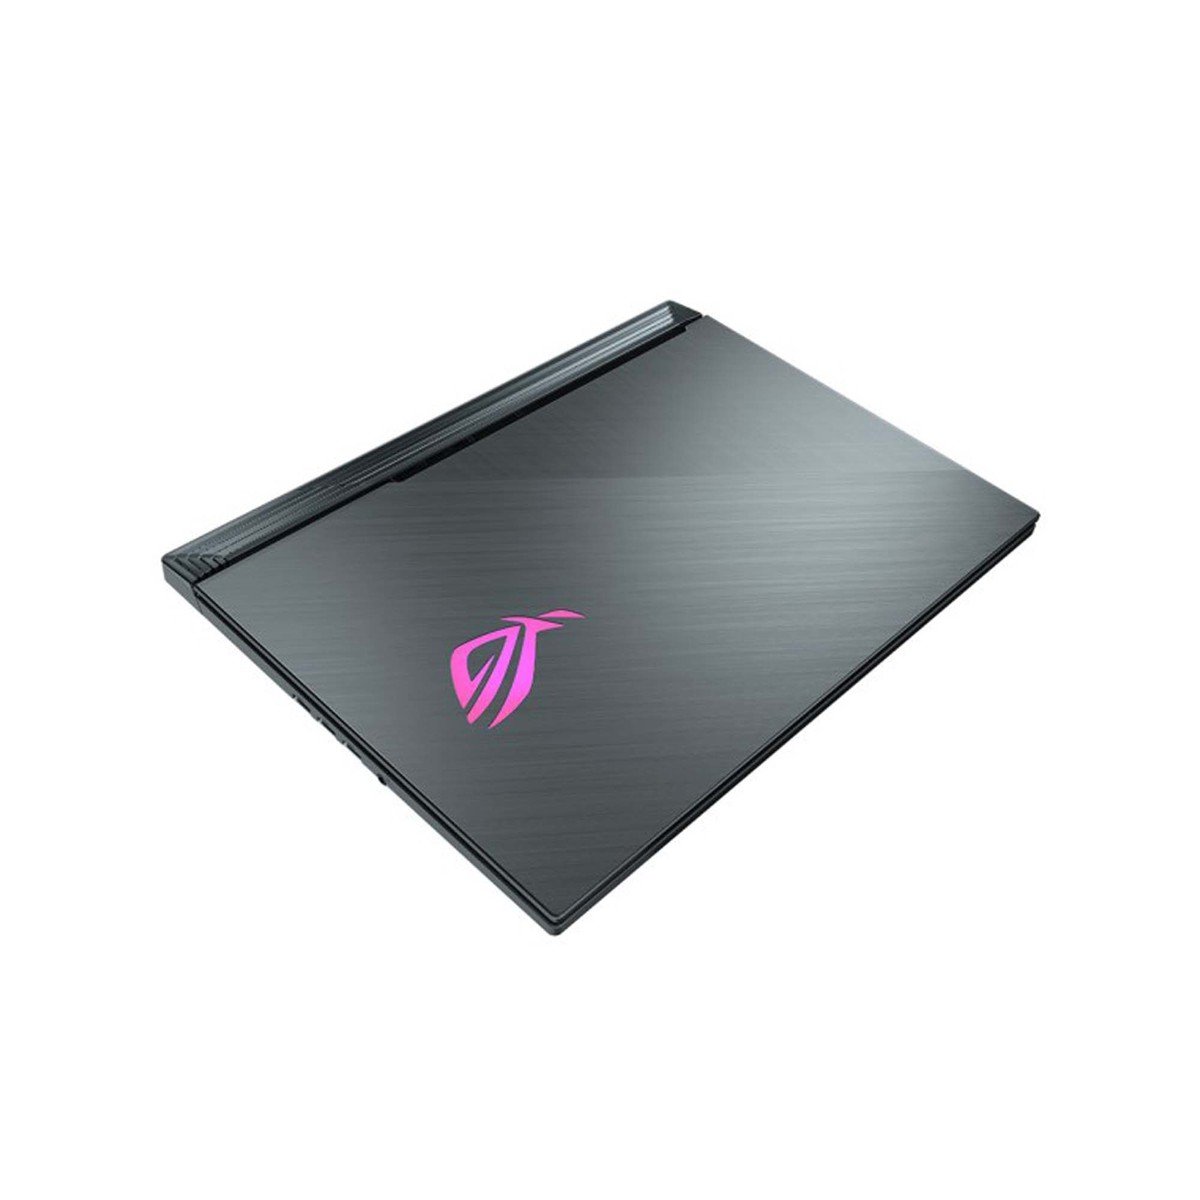 Asus G731GV-EV073T ROG STRIX SCAR III Gaming Notebook Black (Core i7, 16GB, 1TB+256GB SSD, 17.3" FHD, GeForce RTX 2060 6GB, Windows 10)